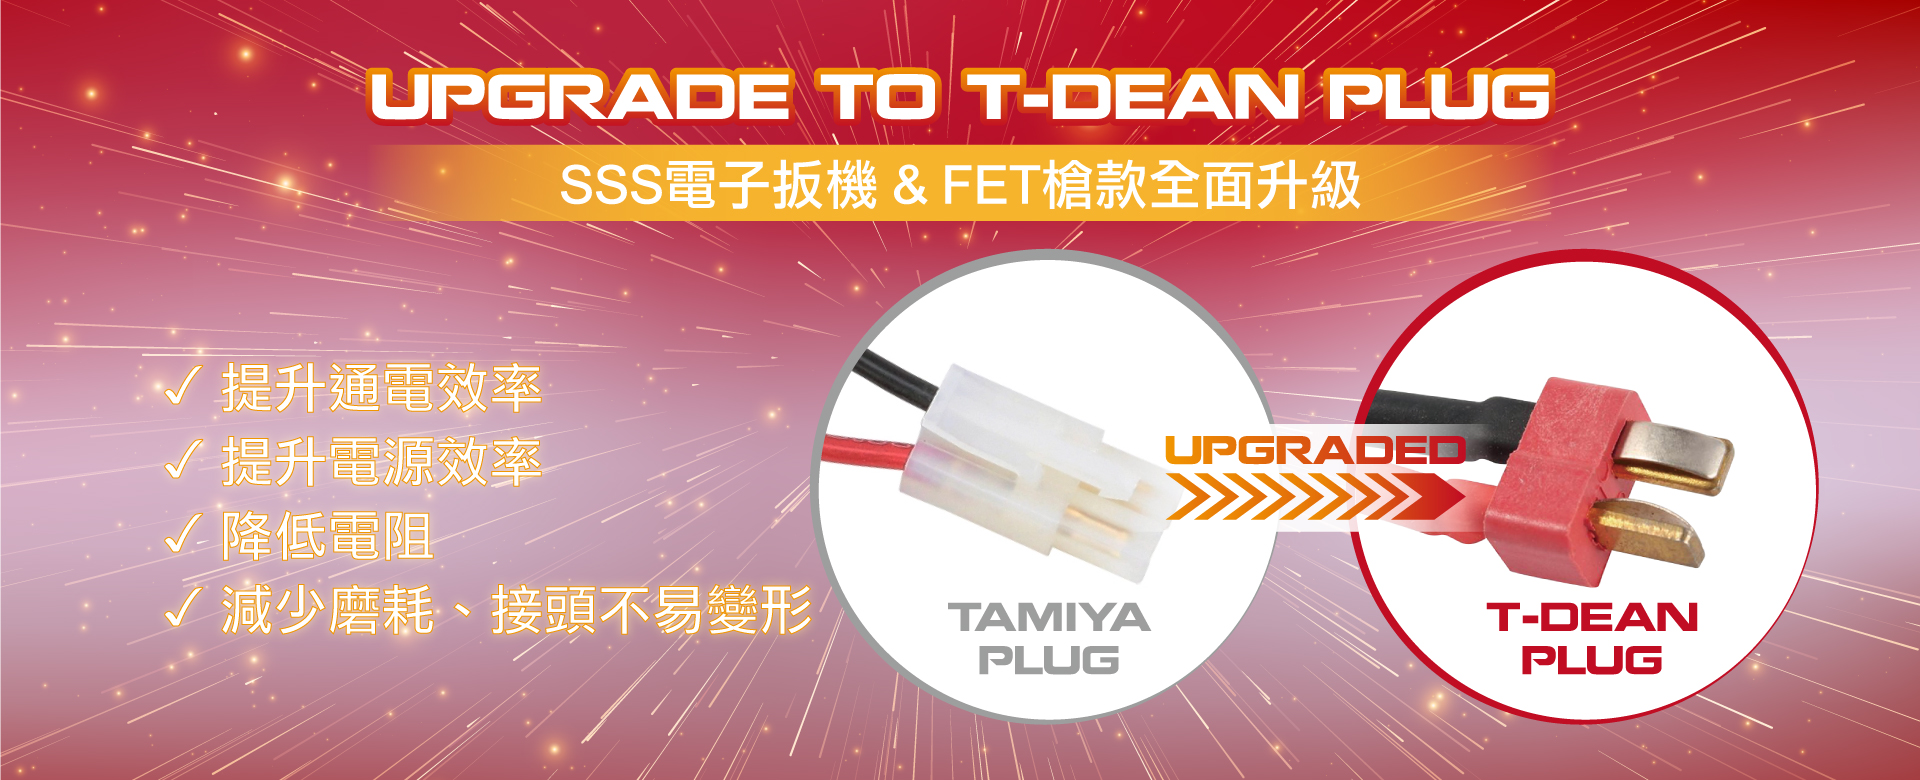 T-Dean plug Upgrade